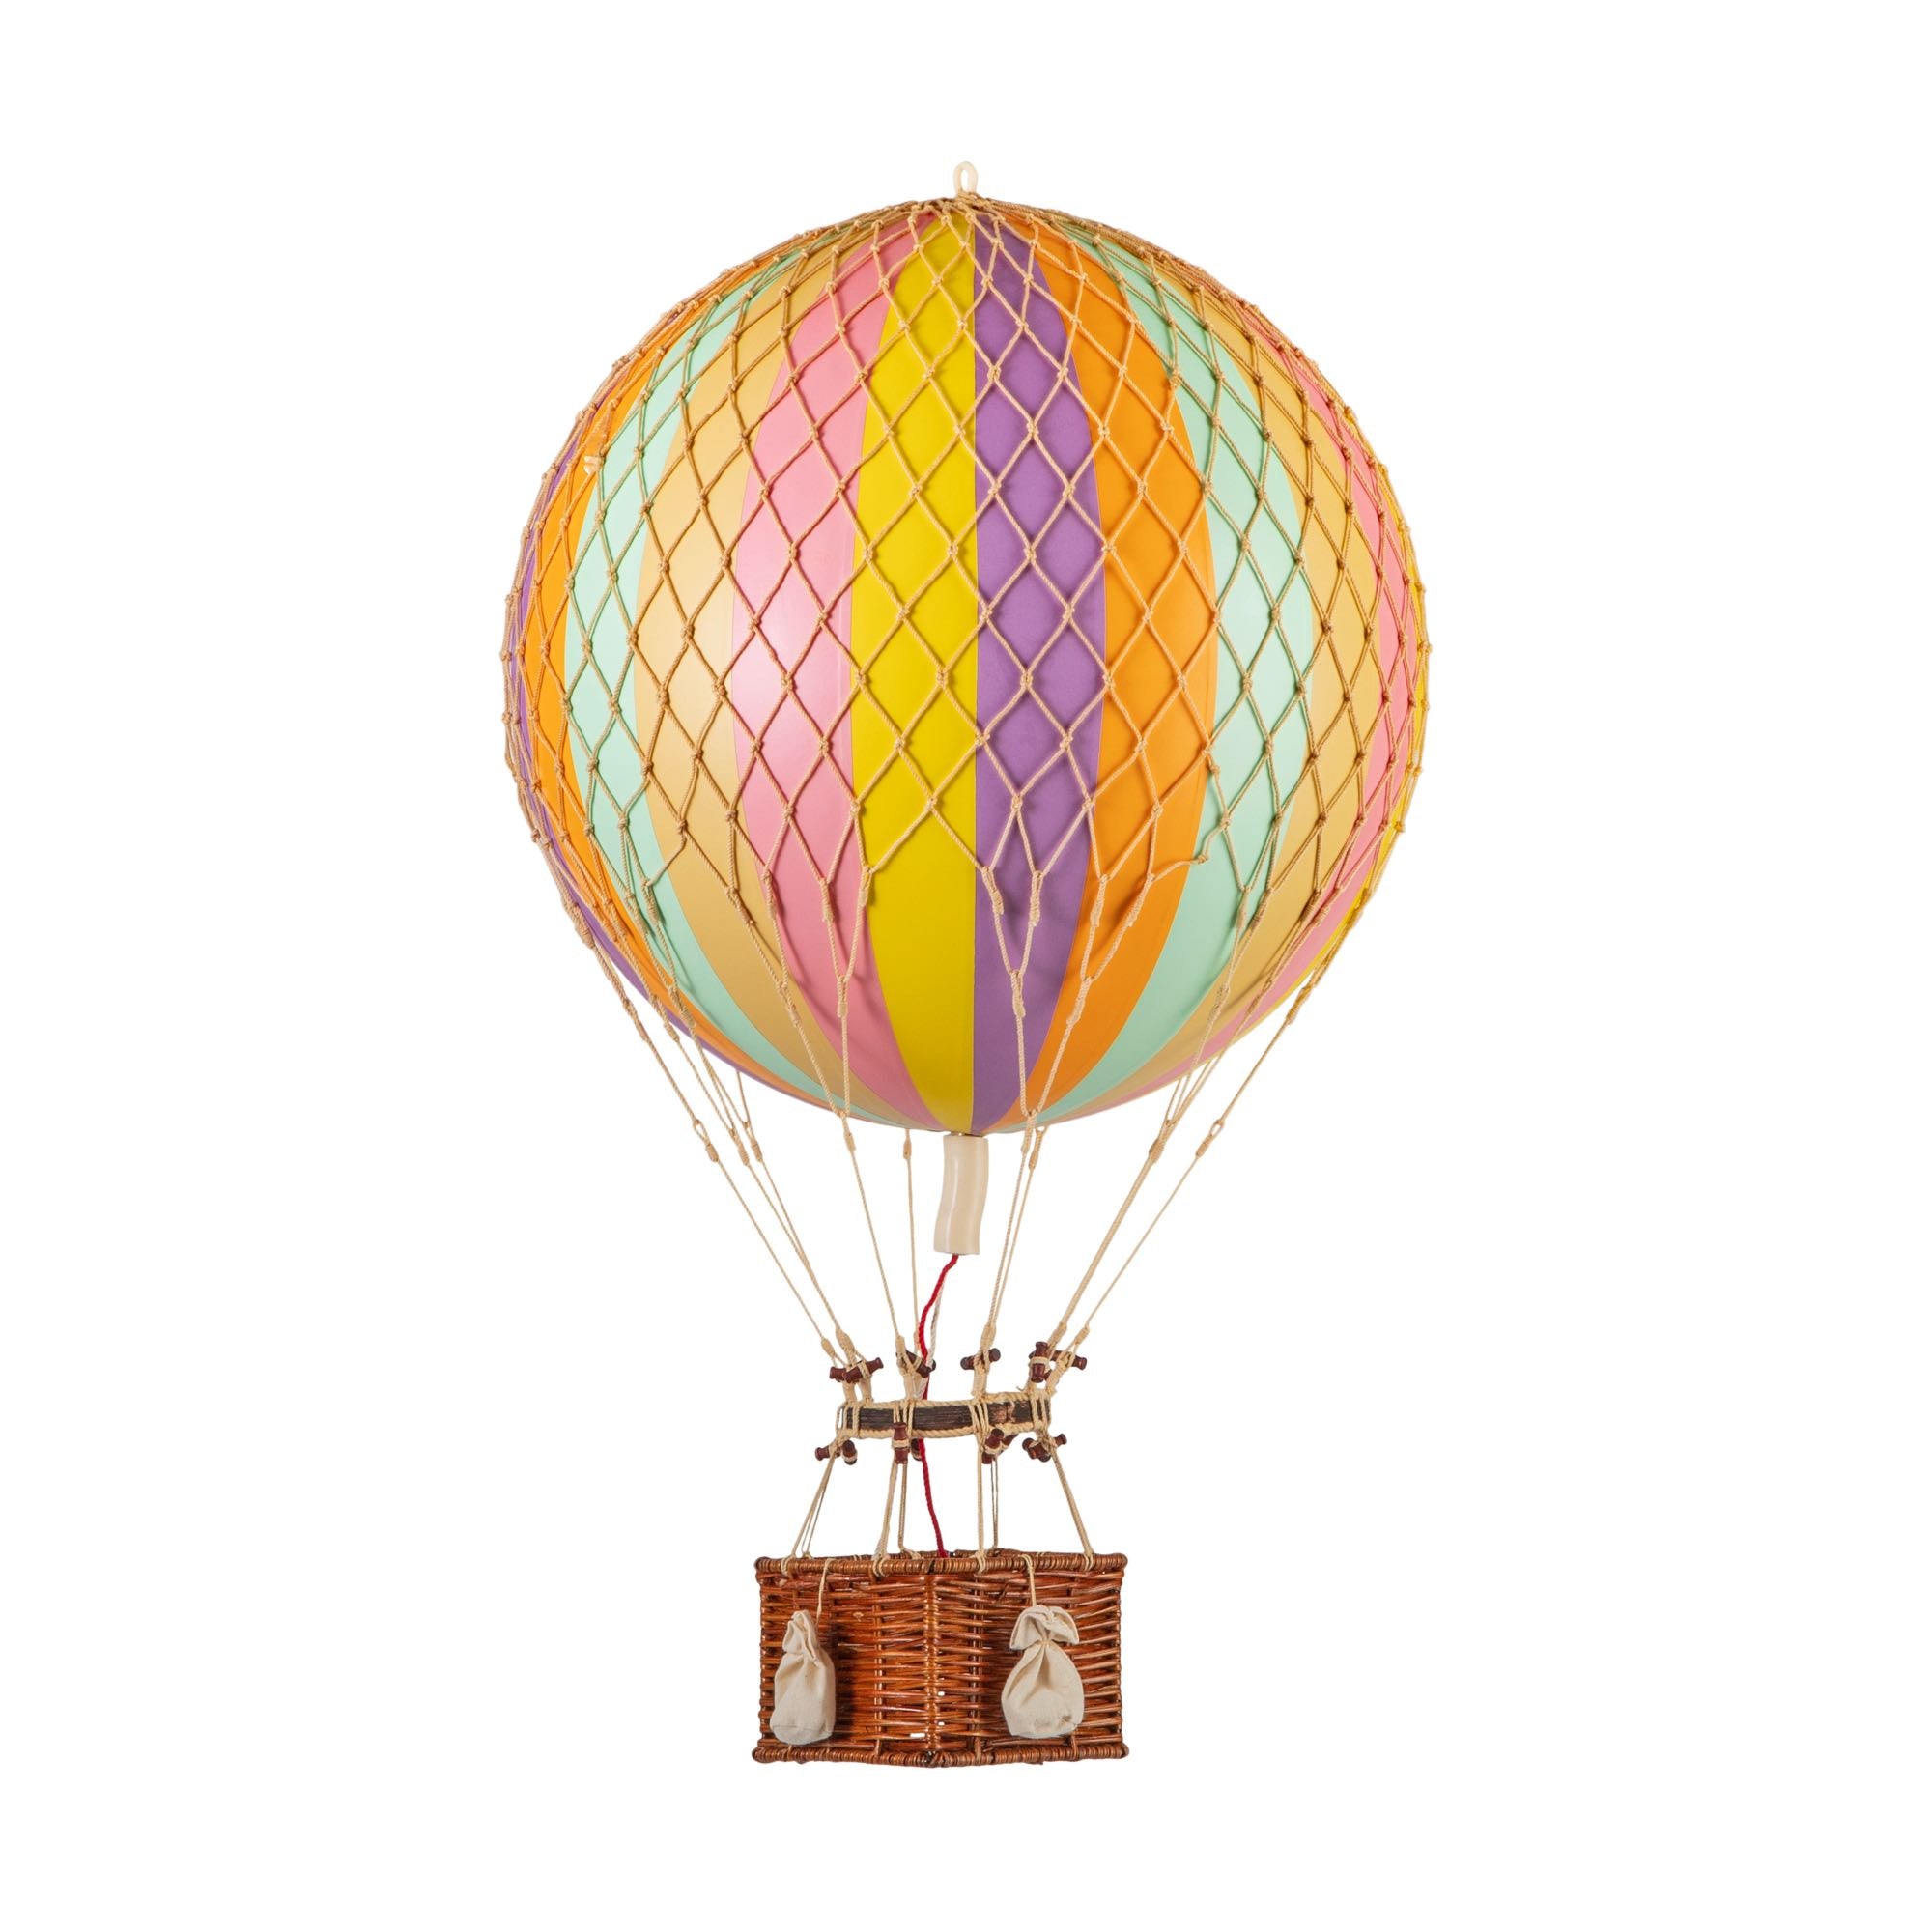 Billede af Luftballon Rainbow Pastel, 32 cm. Royal Aero, Authentic Models